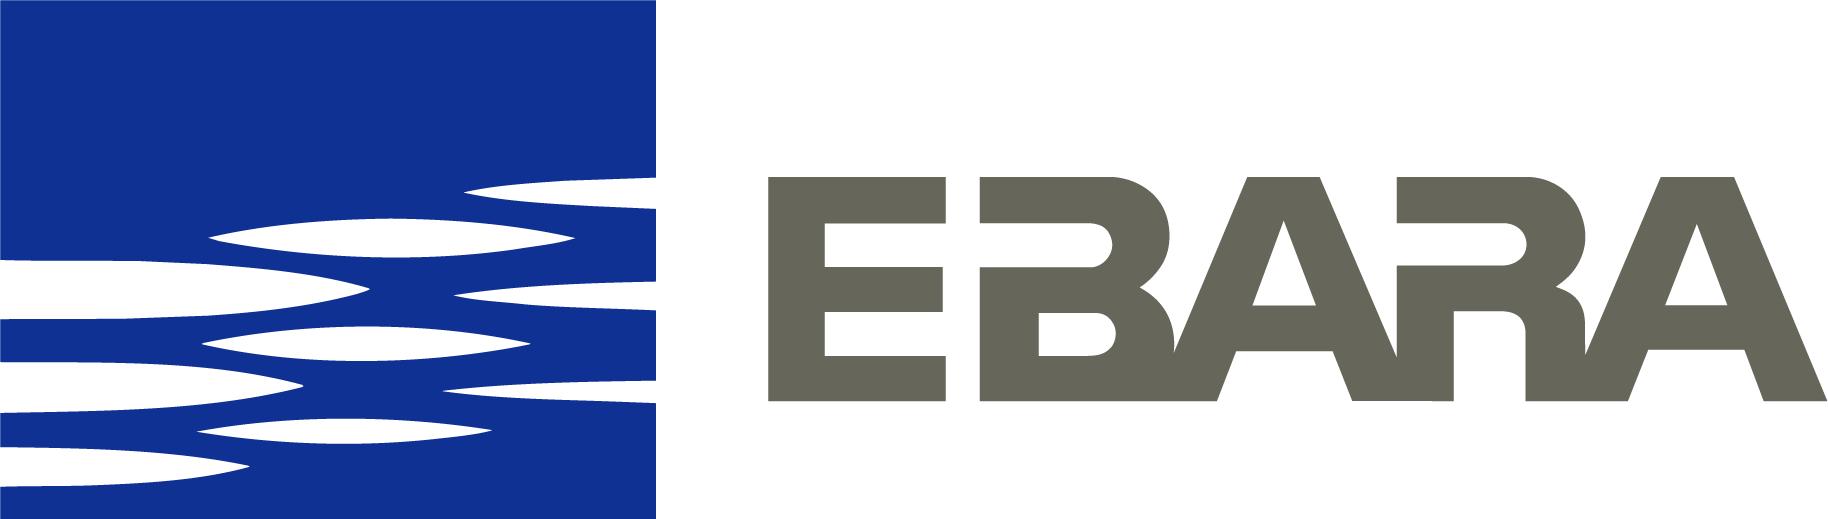 ebara-logo-featured